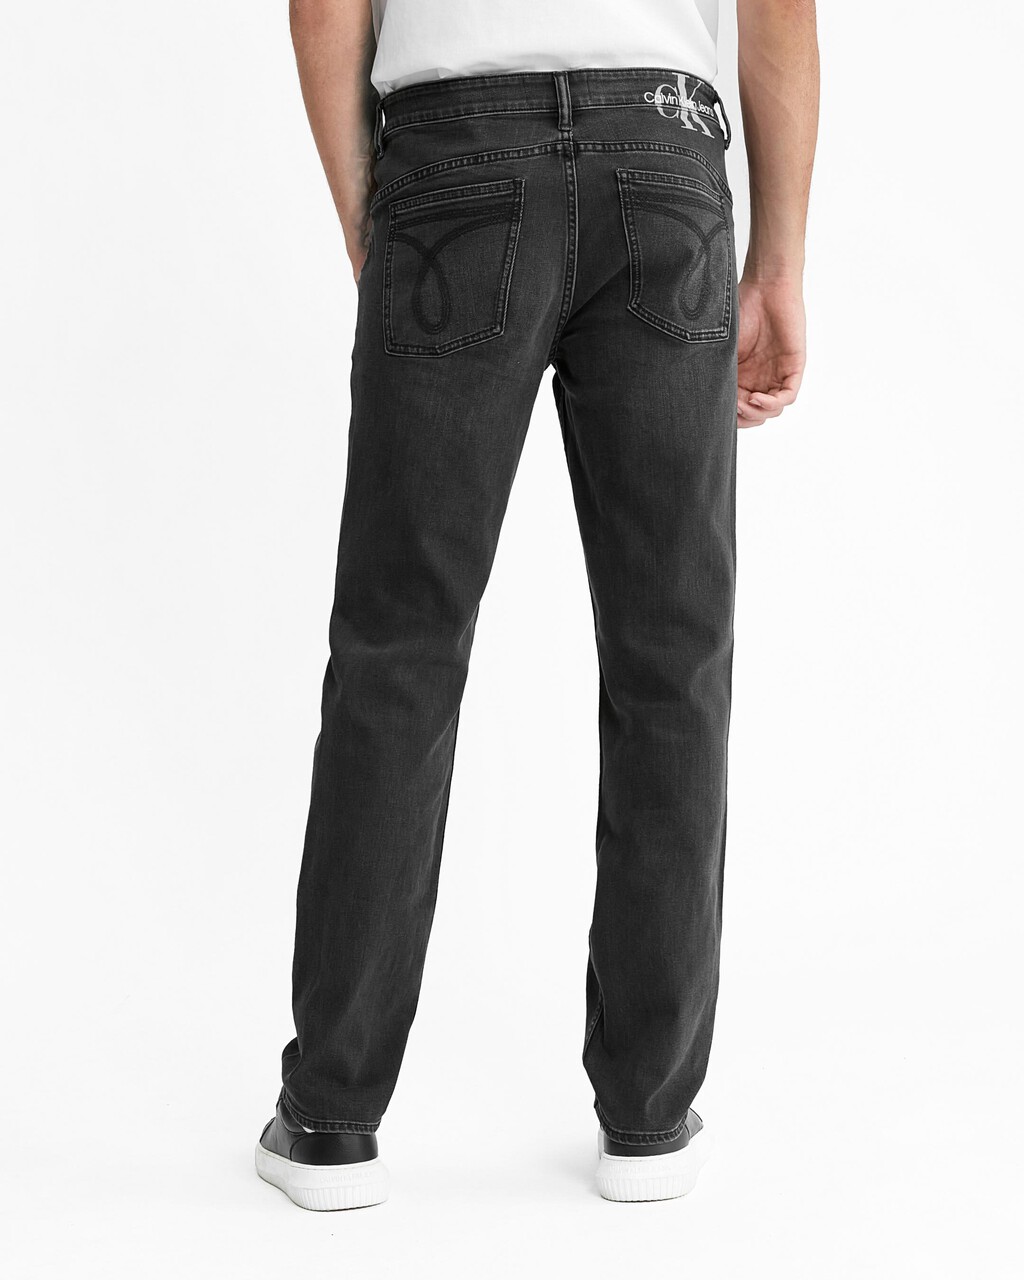 37.5 Black Comfort Stretch Body Jeans, Denim Black, hi-res